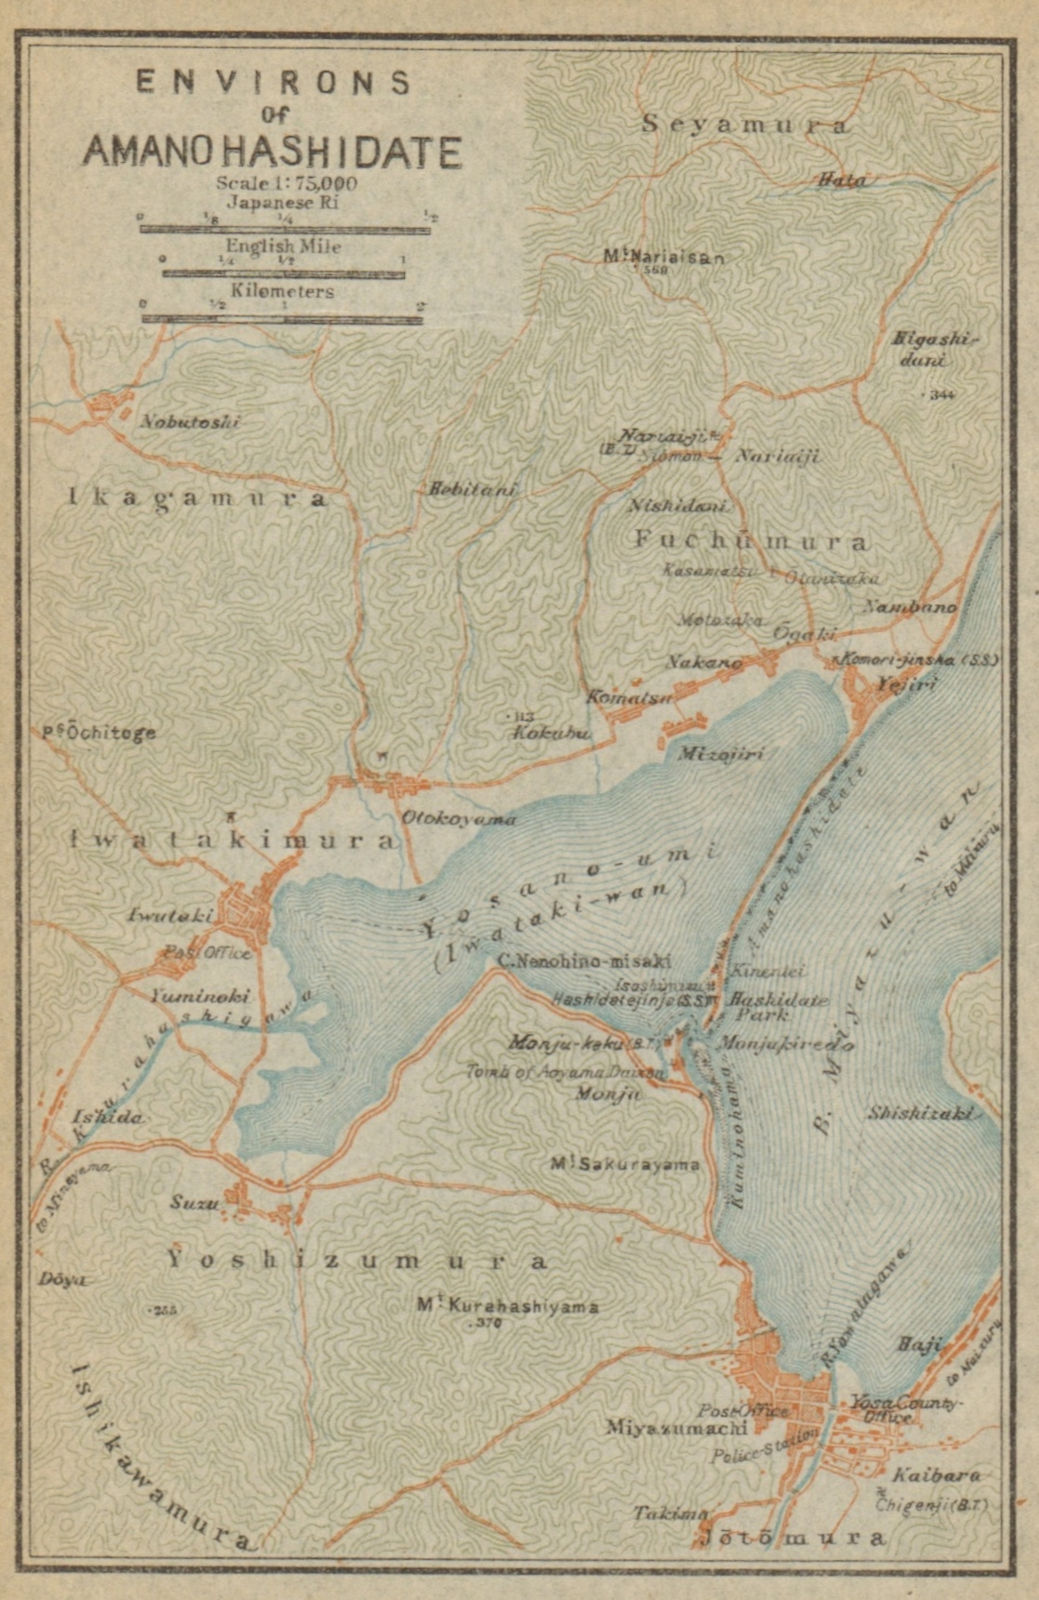 Associate Product Amanohashidate environs, Miyazu Bay. Kyoto Prefecture, Japan 1914 old map